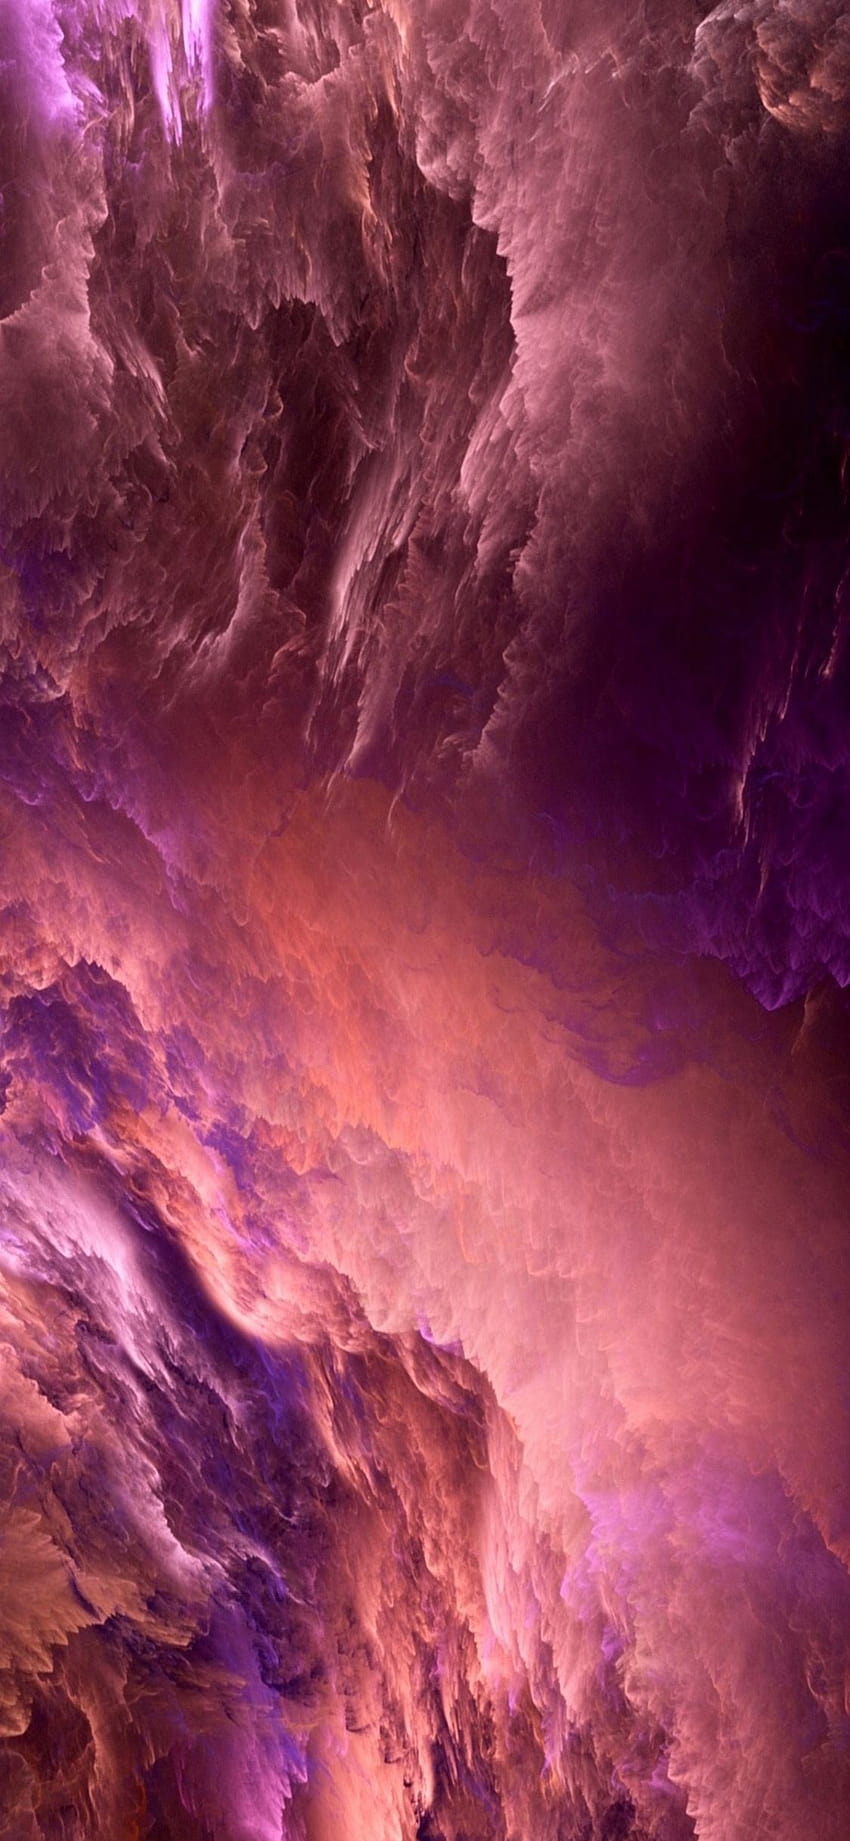 Cloud iPhone X High Resolution 1125 x 2436 Pixels, pink purple clouds iphone HD phone wallpaper